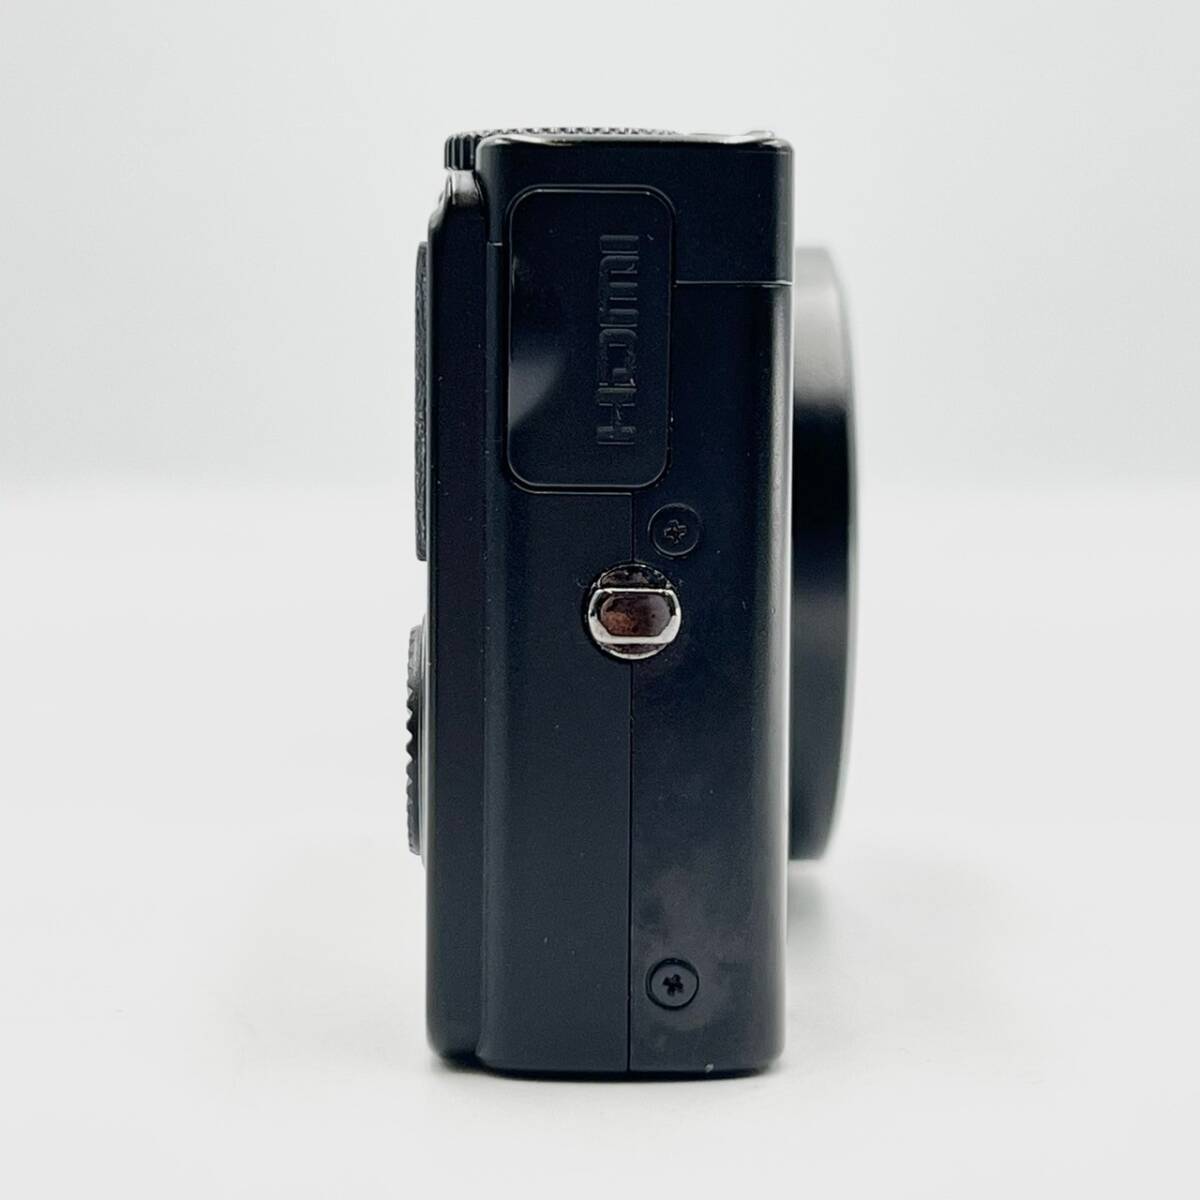 BCg249R 60 Nikon COOLPIX P300 クールピクス デジタルカメラ 4.3-17.9mm 1:1.8-4.9 SDカード2GB 充電器付 顔認識/AF自動追尾/手ブレ補正の画像6